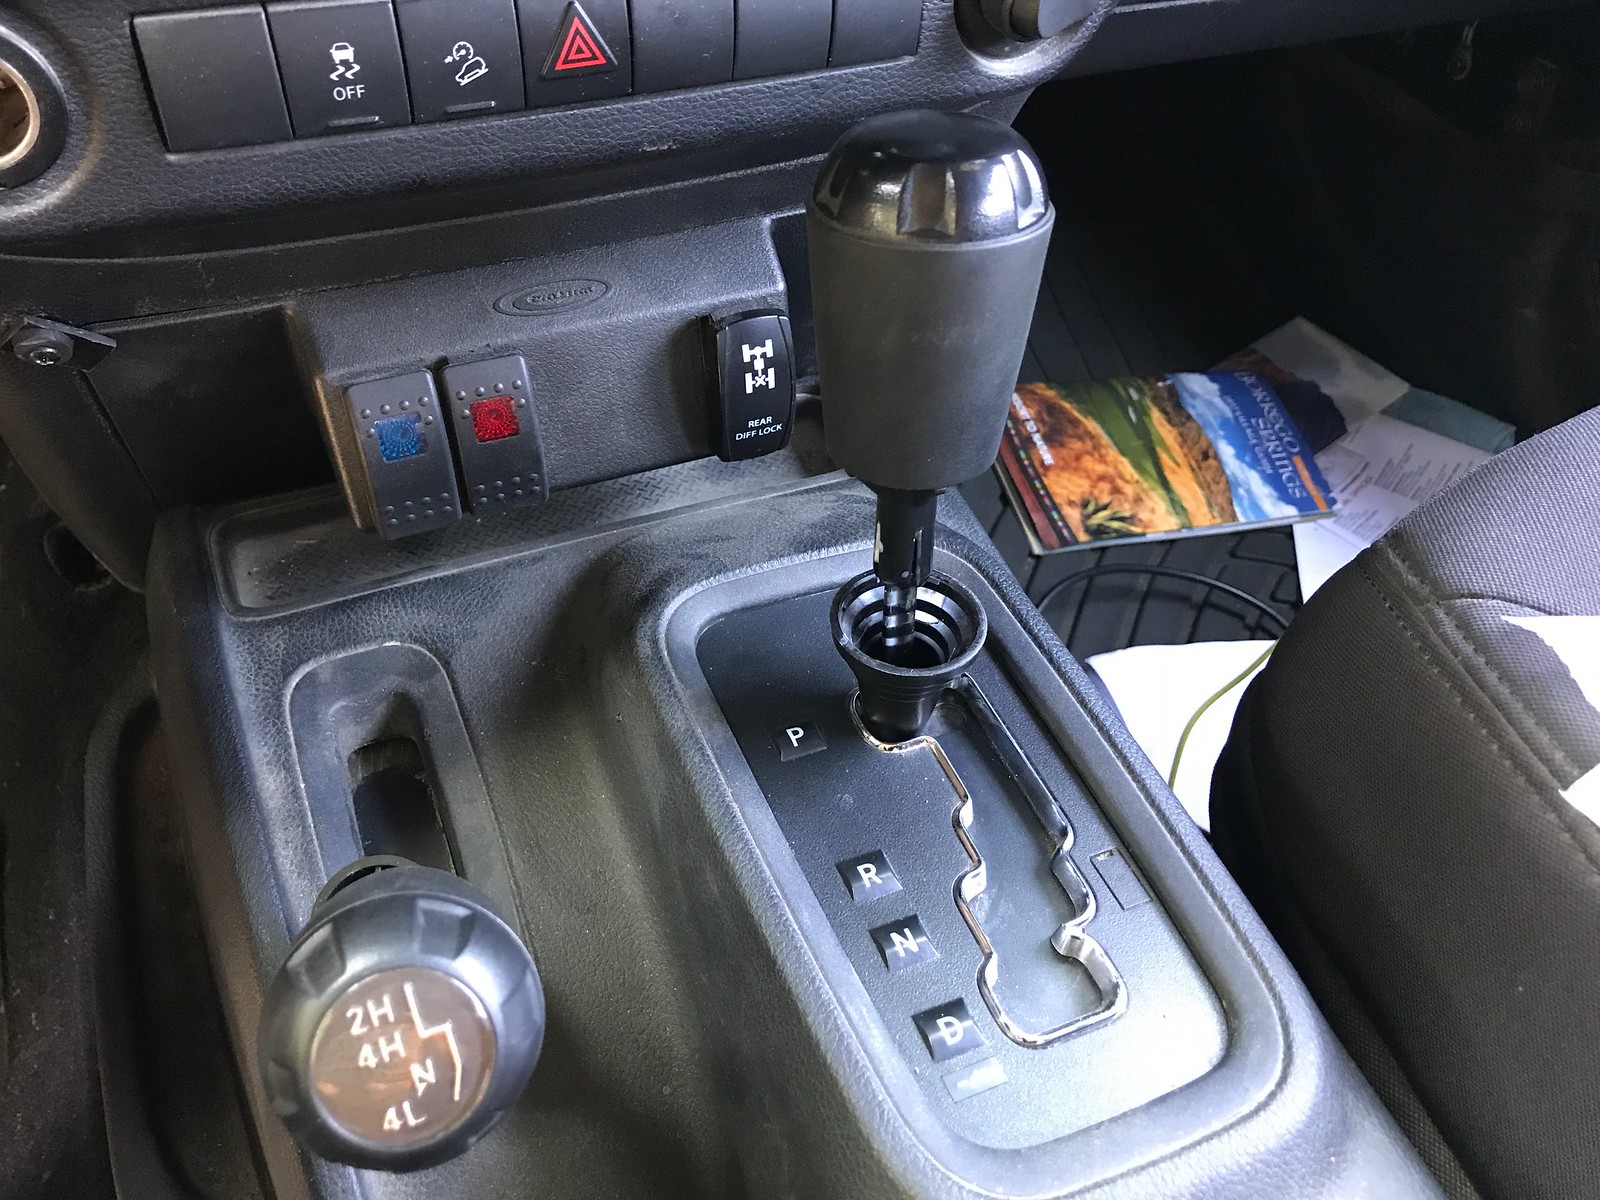 2016 4 wheel drive shifter knob removal | Jeep Wrangler Forum